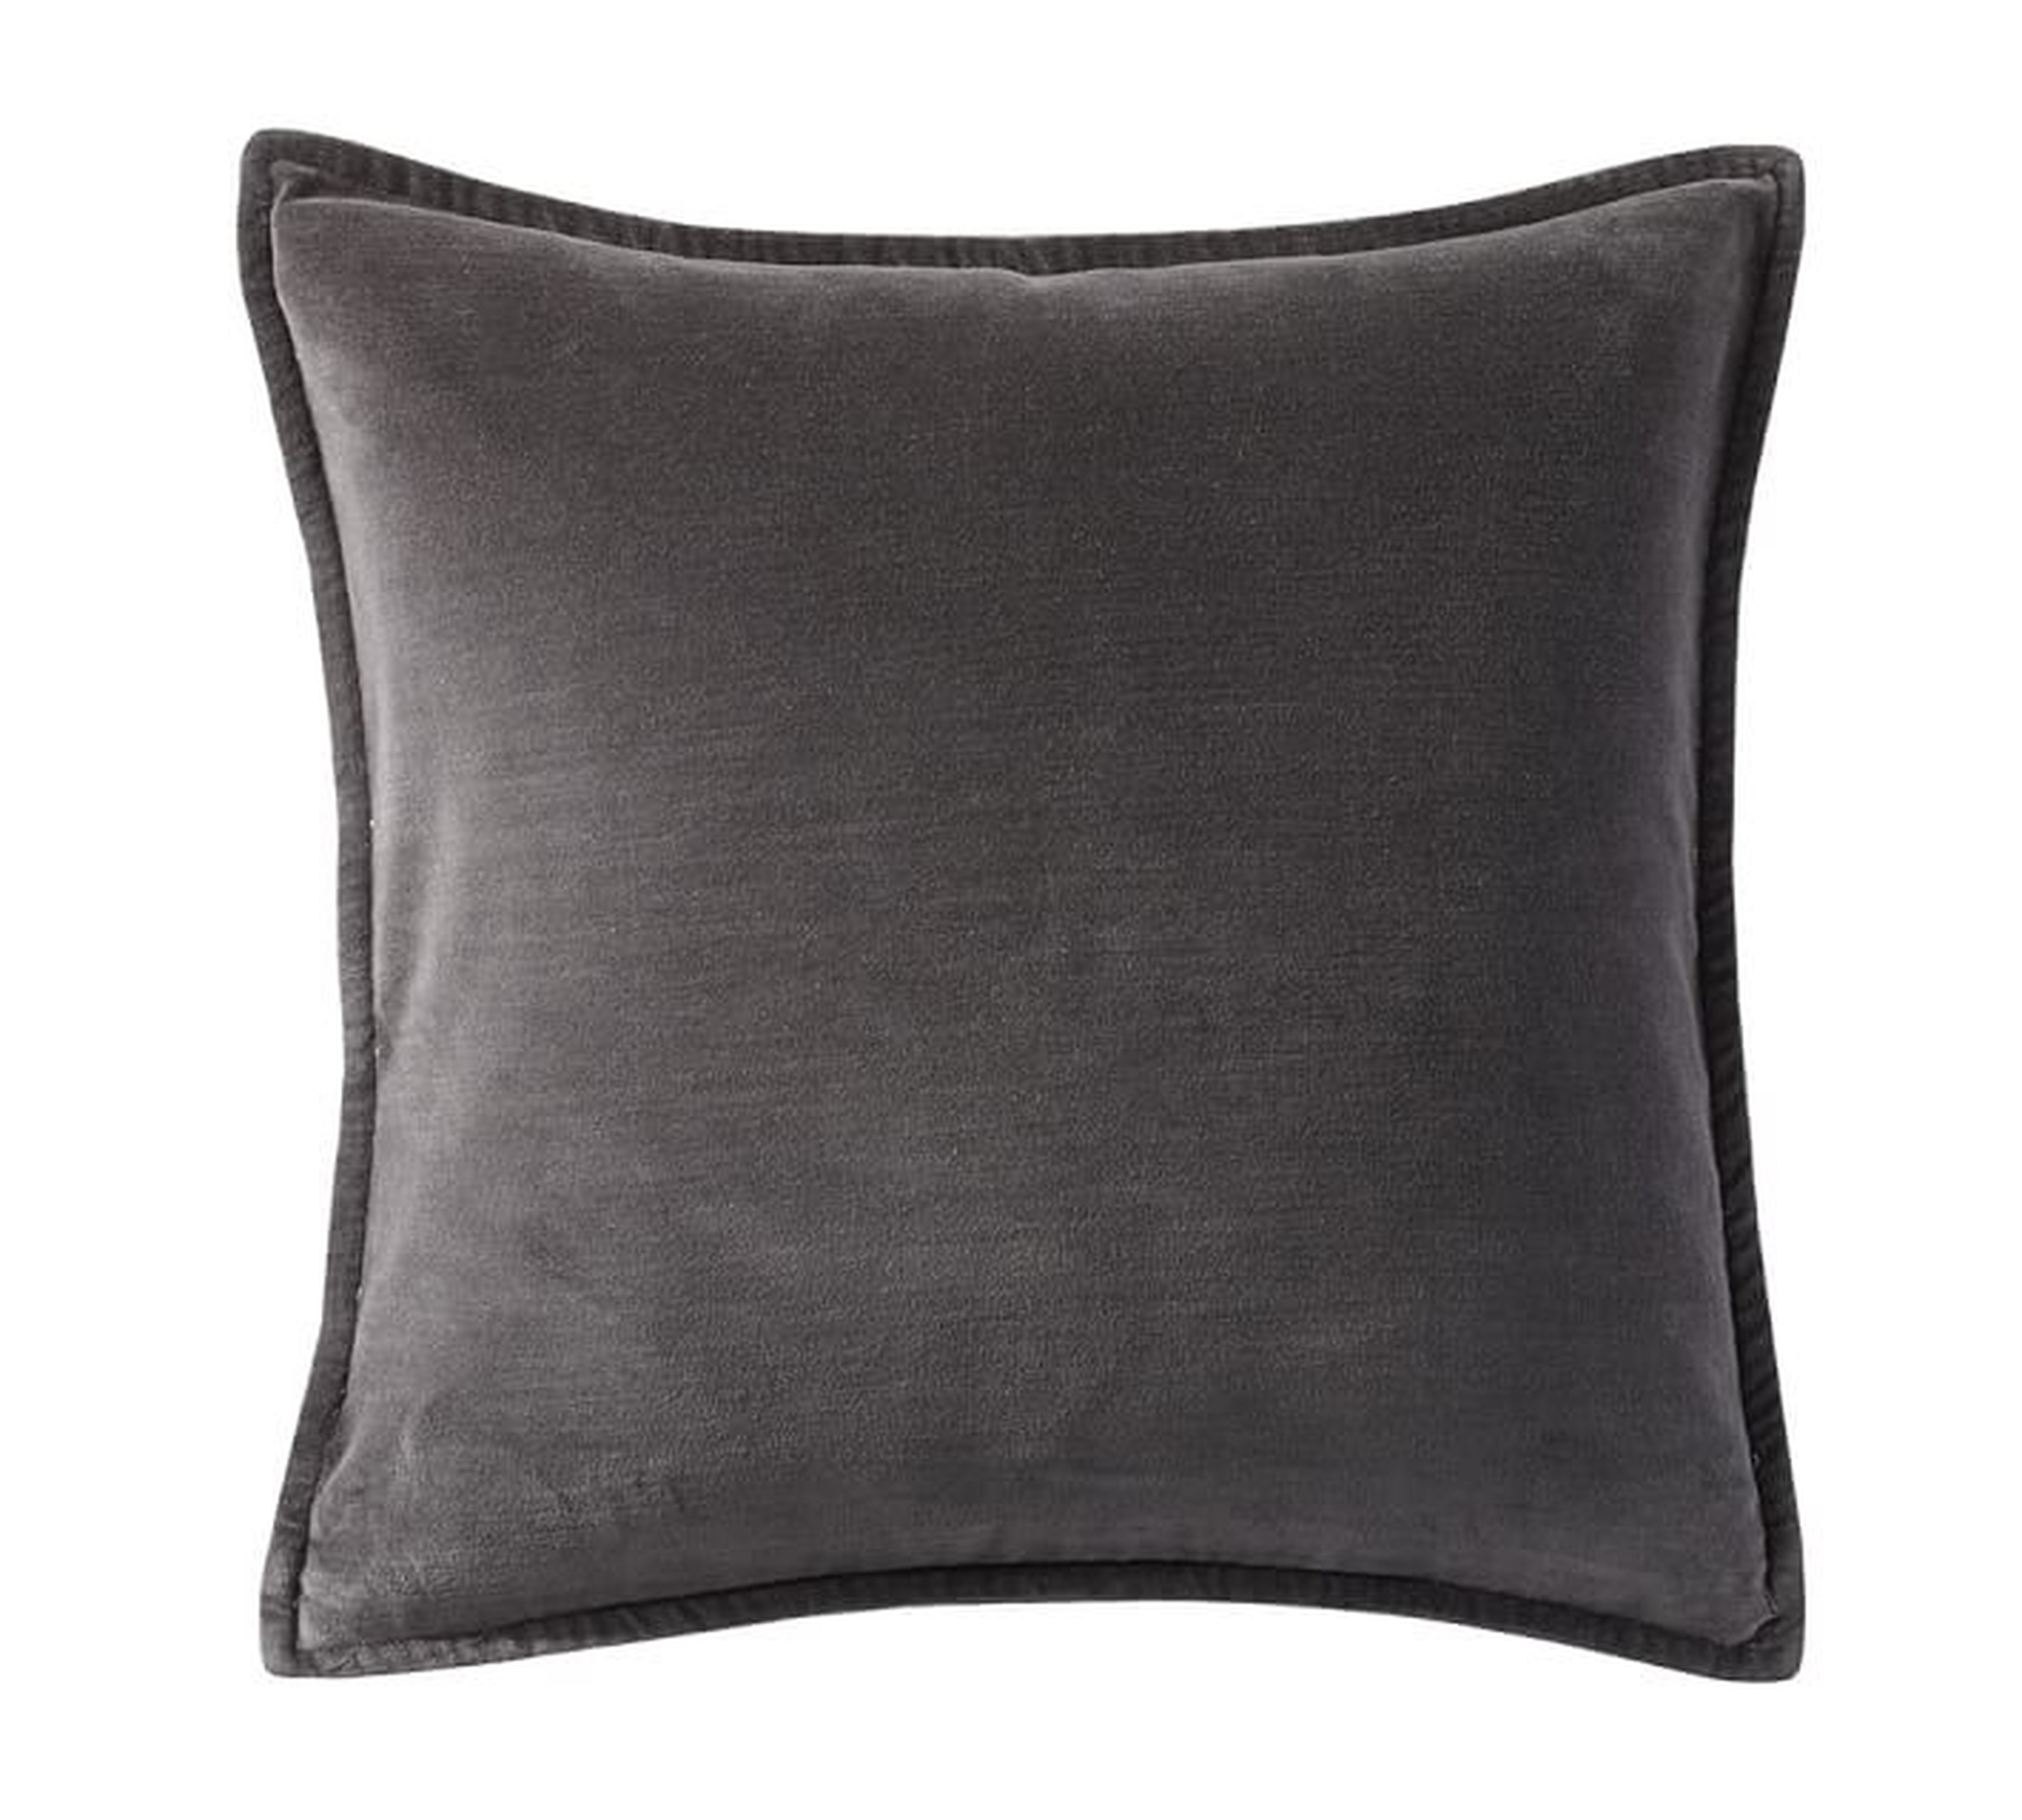 Washed Velvet Pillow Cover -  Ebony - Insert sold seperately - Pottery Barn